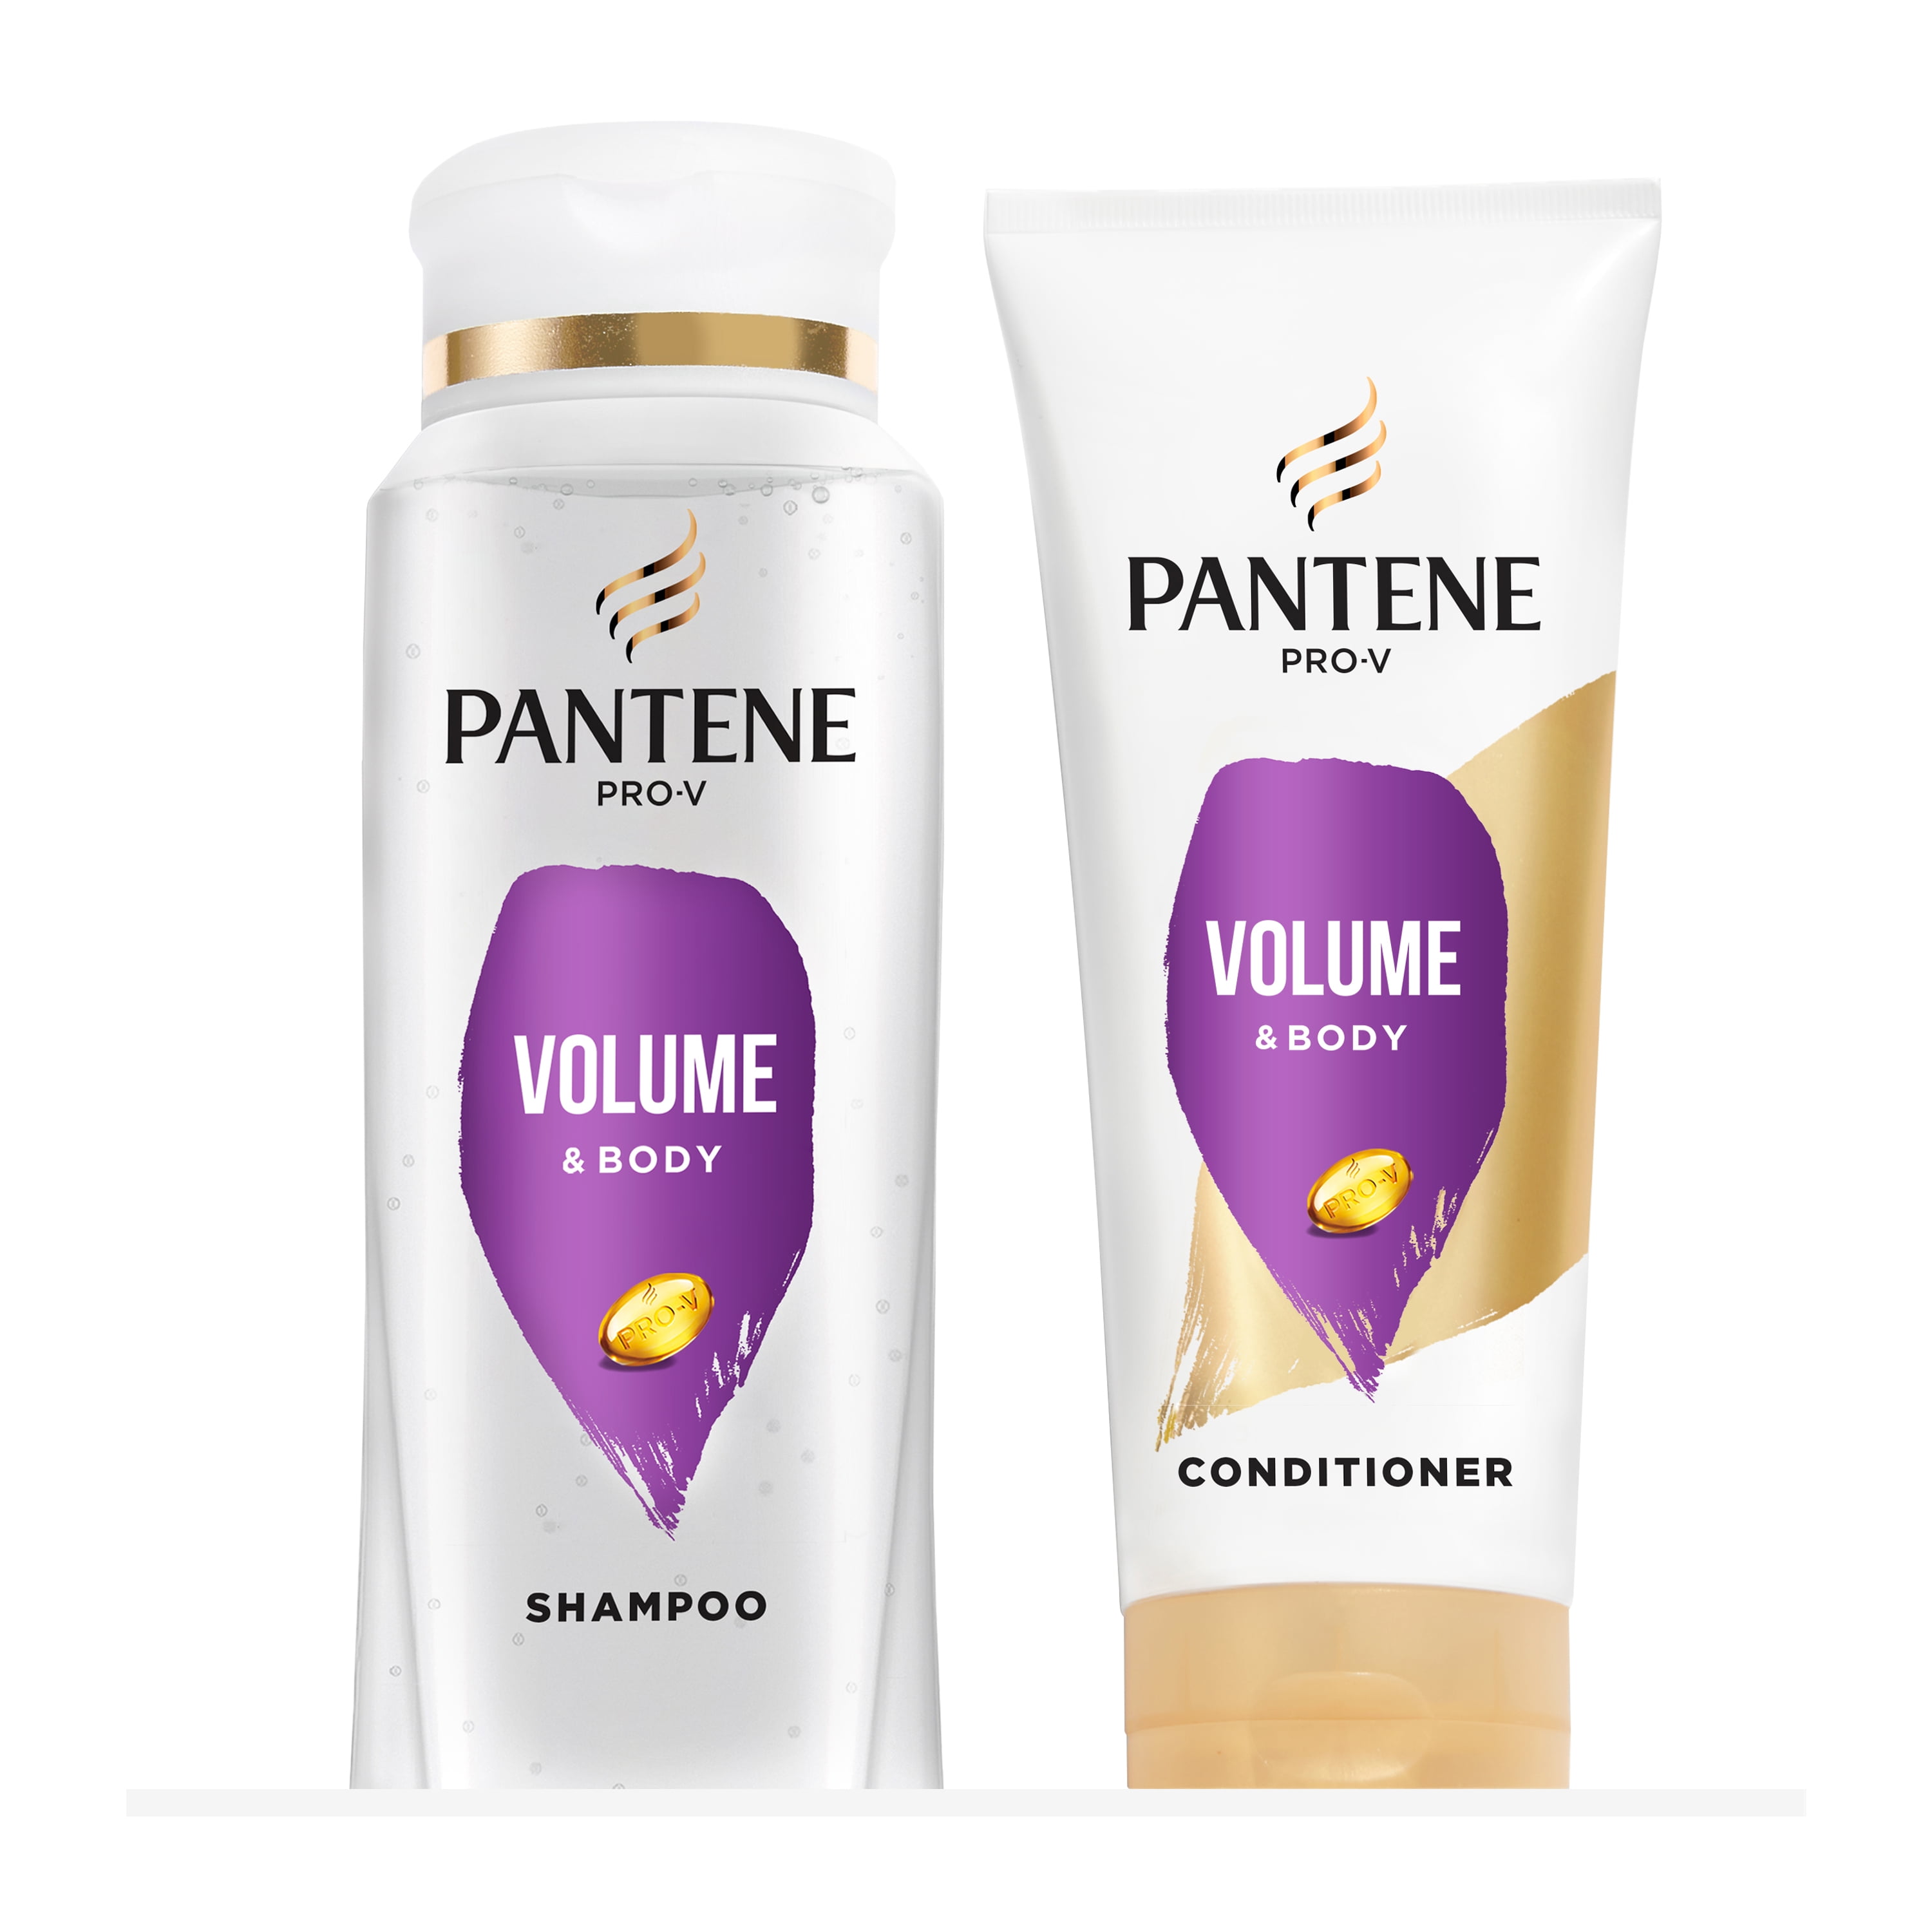 Pantene Pro-V Volume & Body Shampoo + Conditioner, 10.4 oz Shampoo, 9.0 oz Conditioner